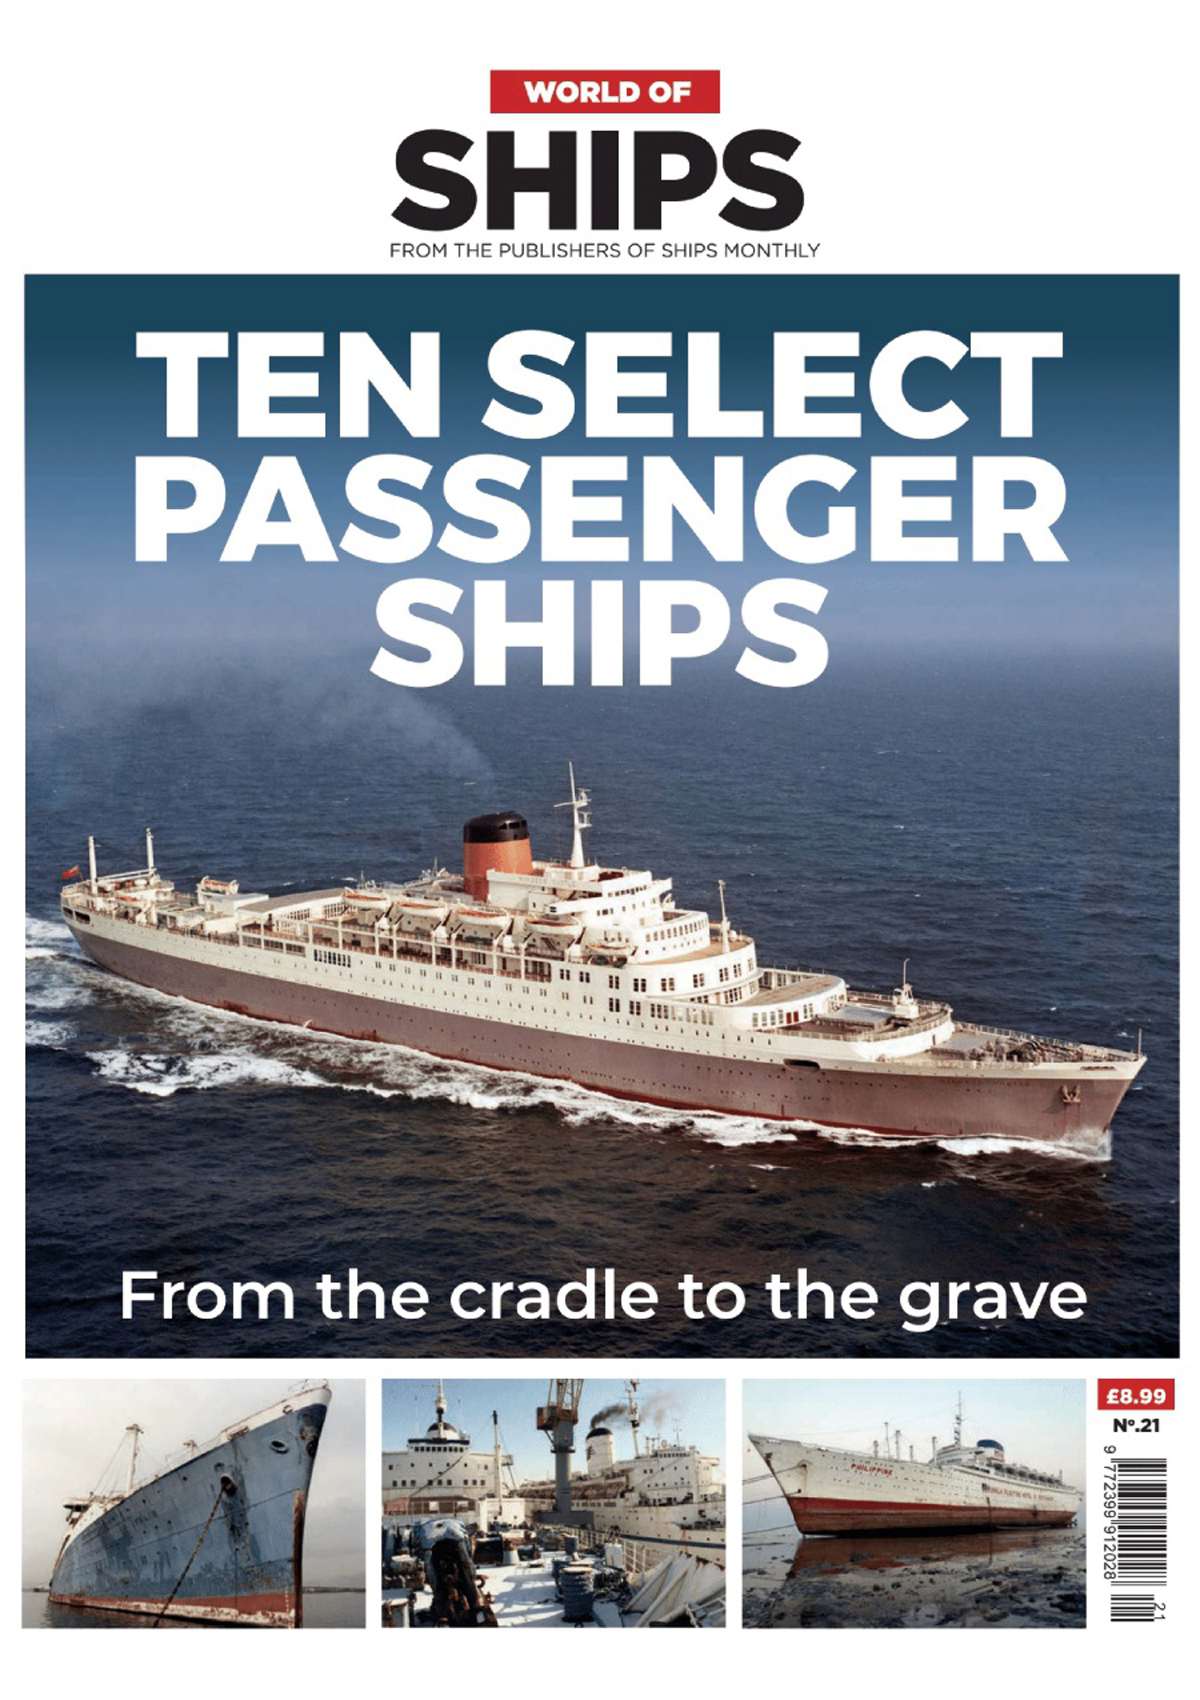 Ten Select Passenger Ships
